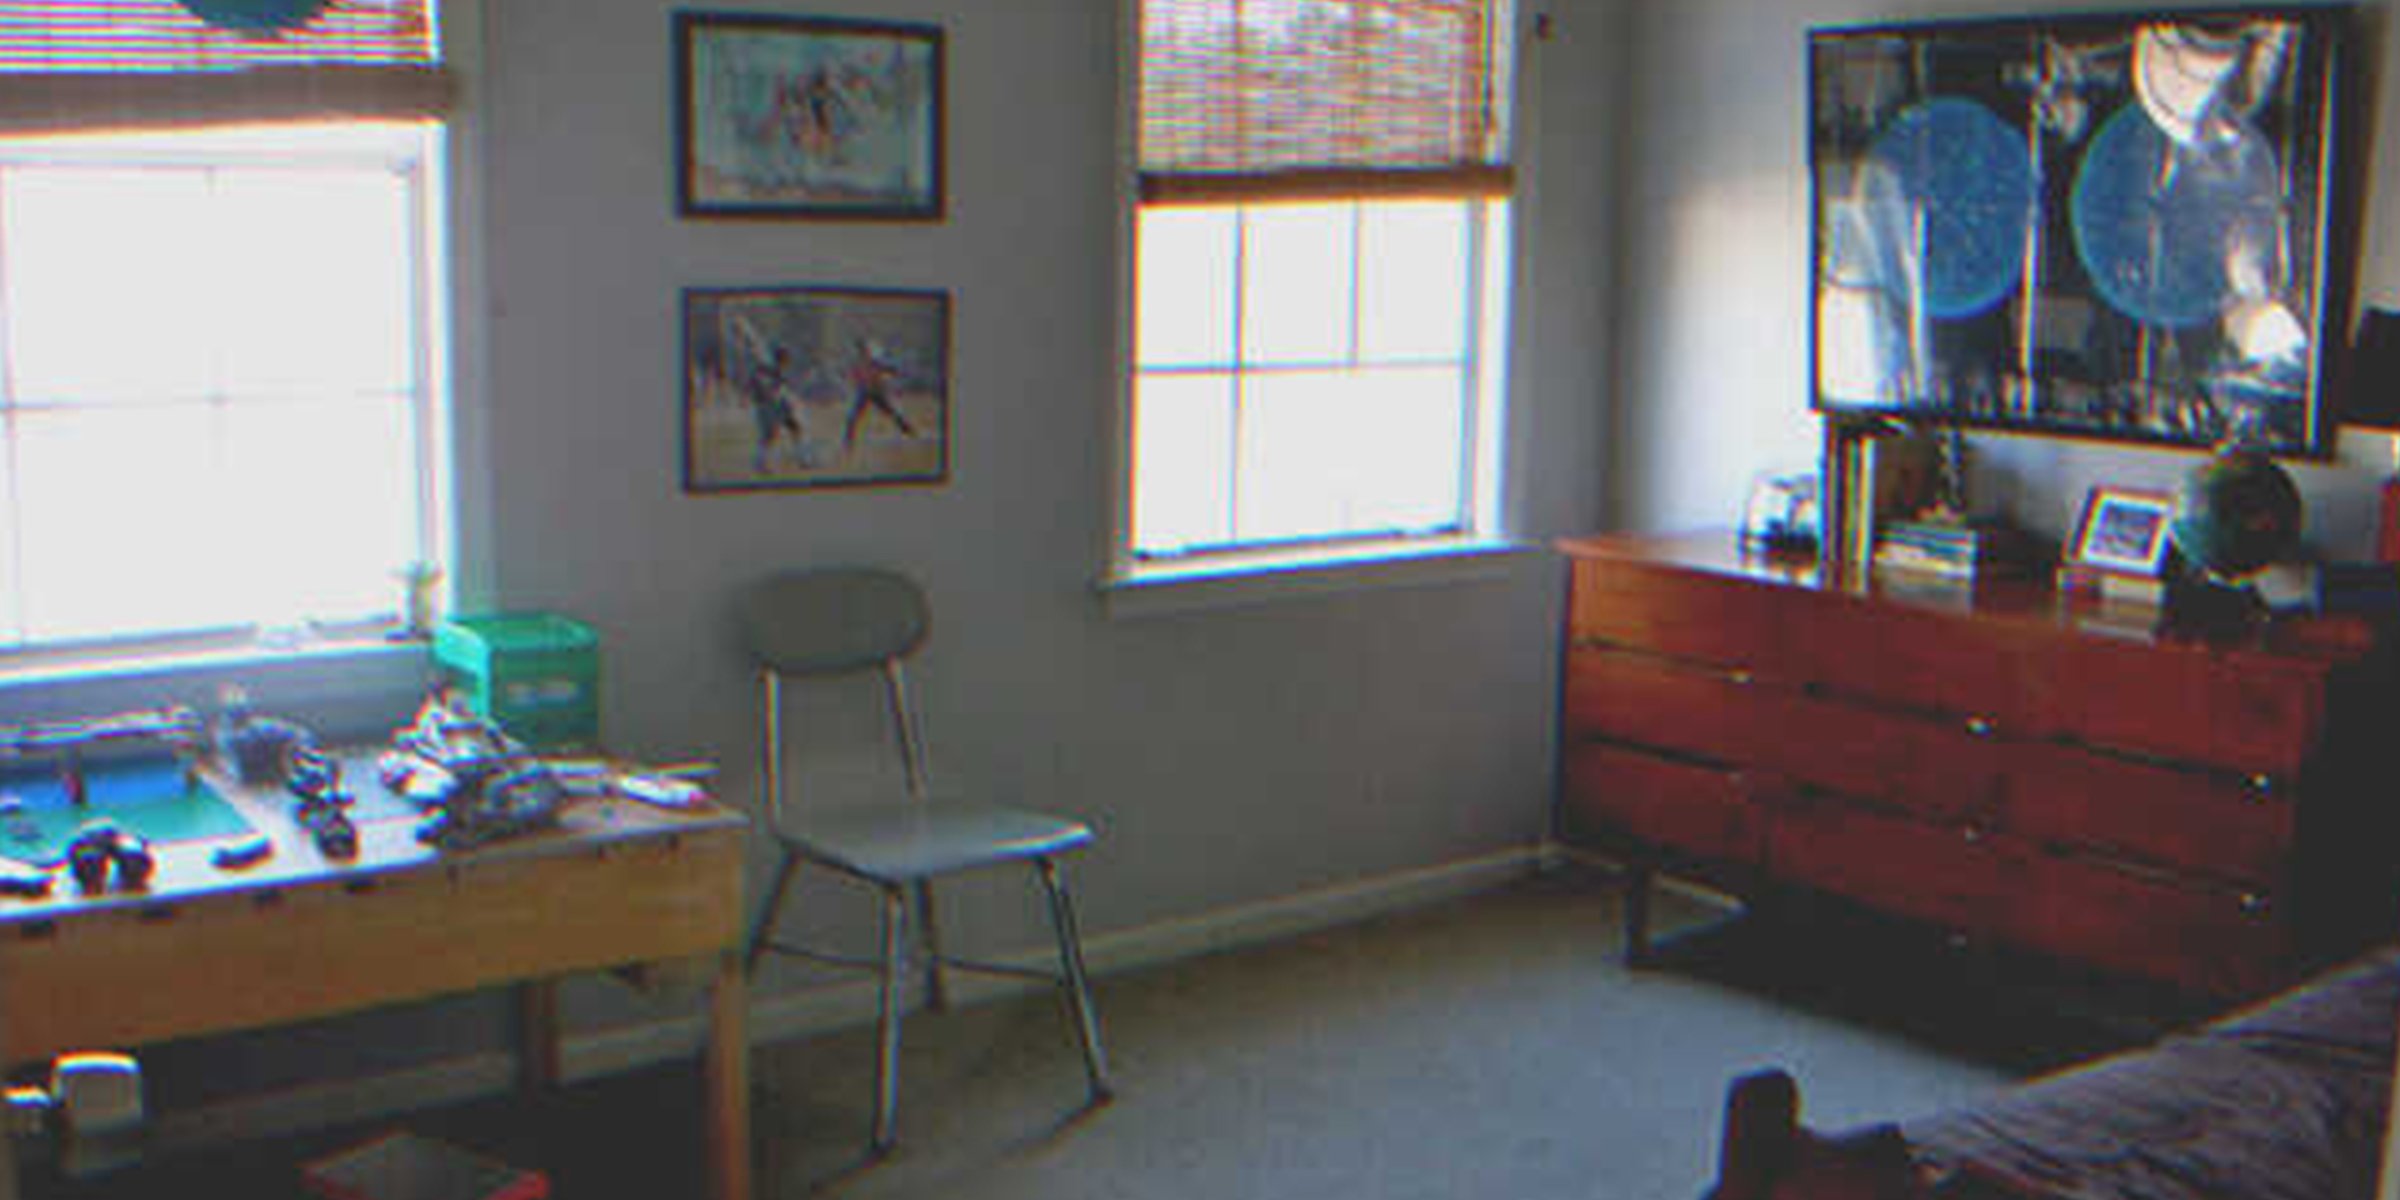 A boy's room | Source: Flickr/vintagechica